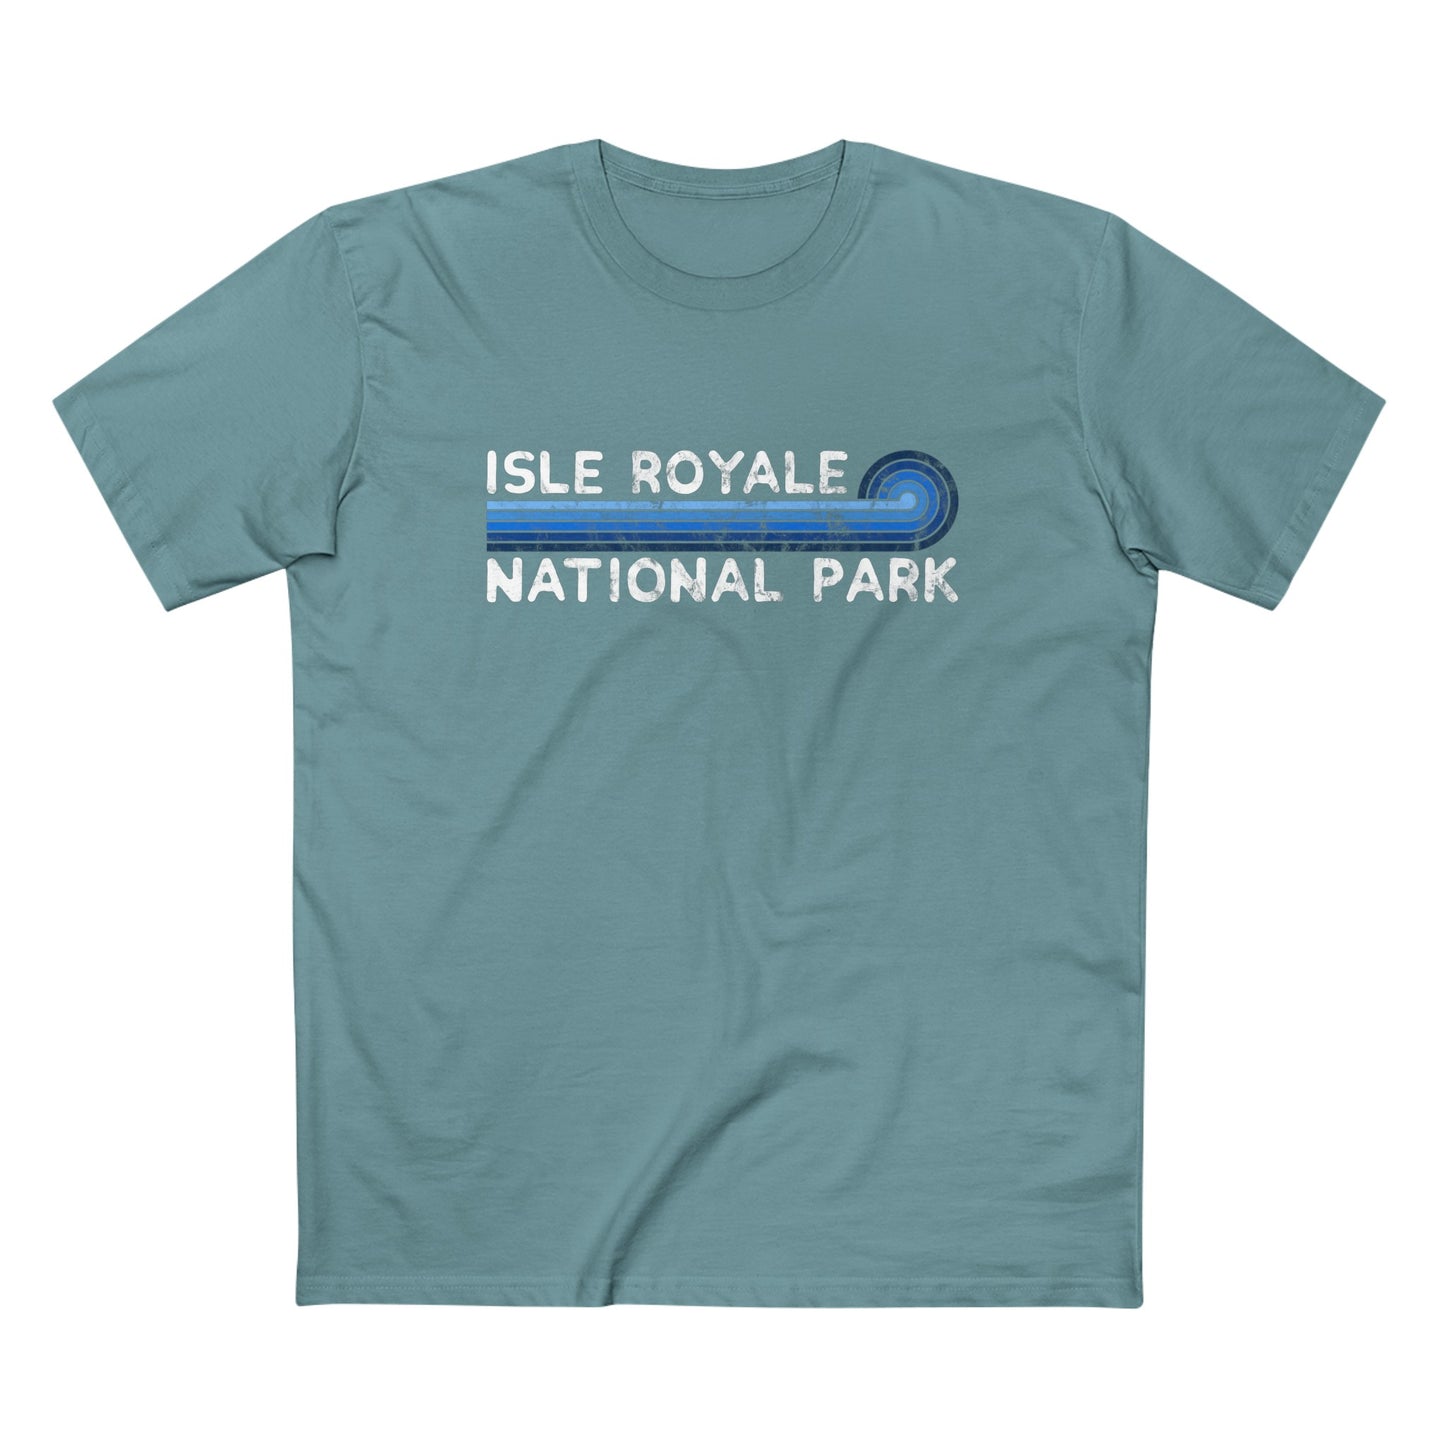 Isle Royale National Park T-Shirt - Blue Vintage Stretched Sunrise